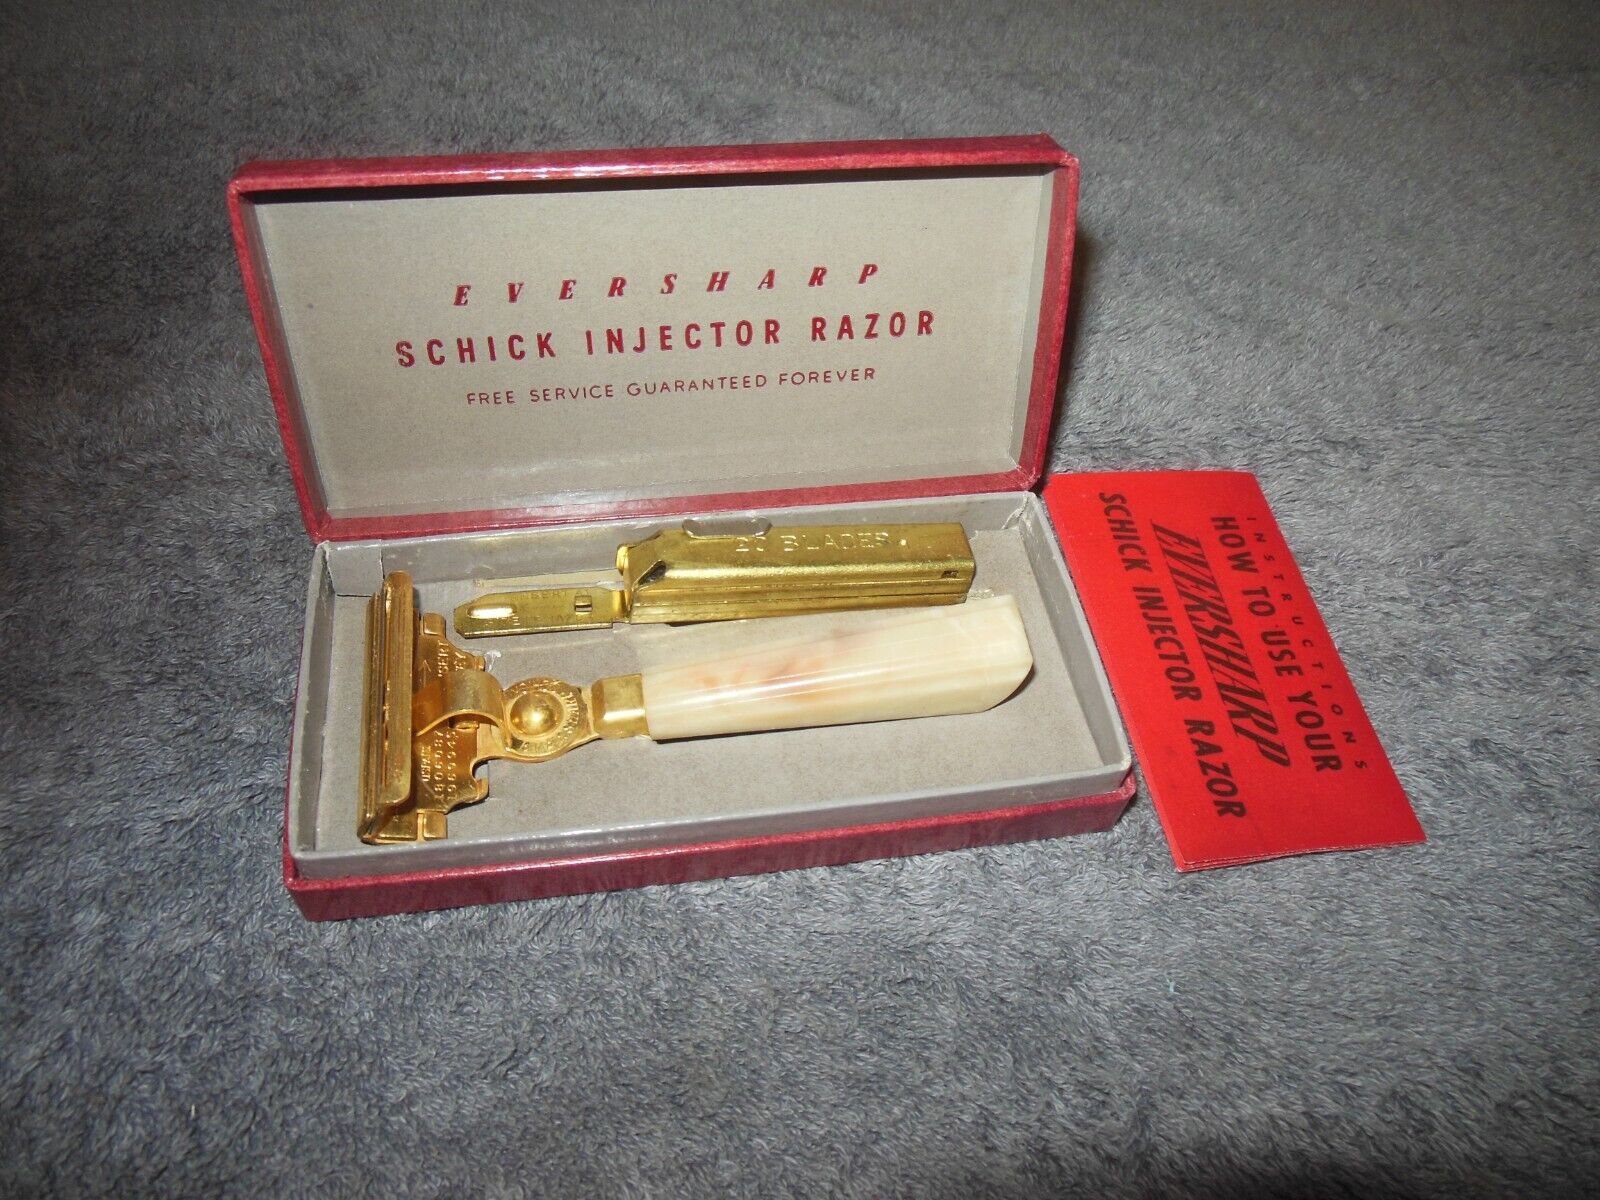 Vintage Schick Eversharp Injector Razor Unused In Box with 20 Blades NOS